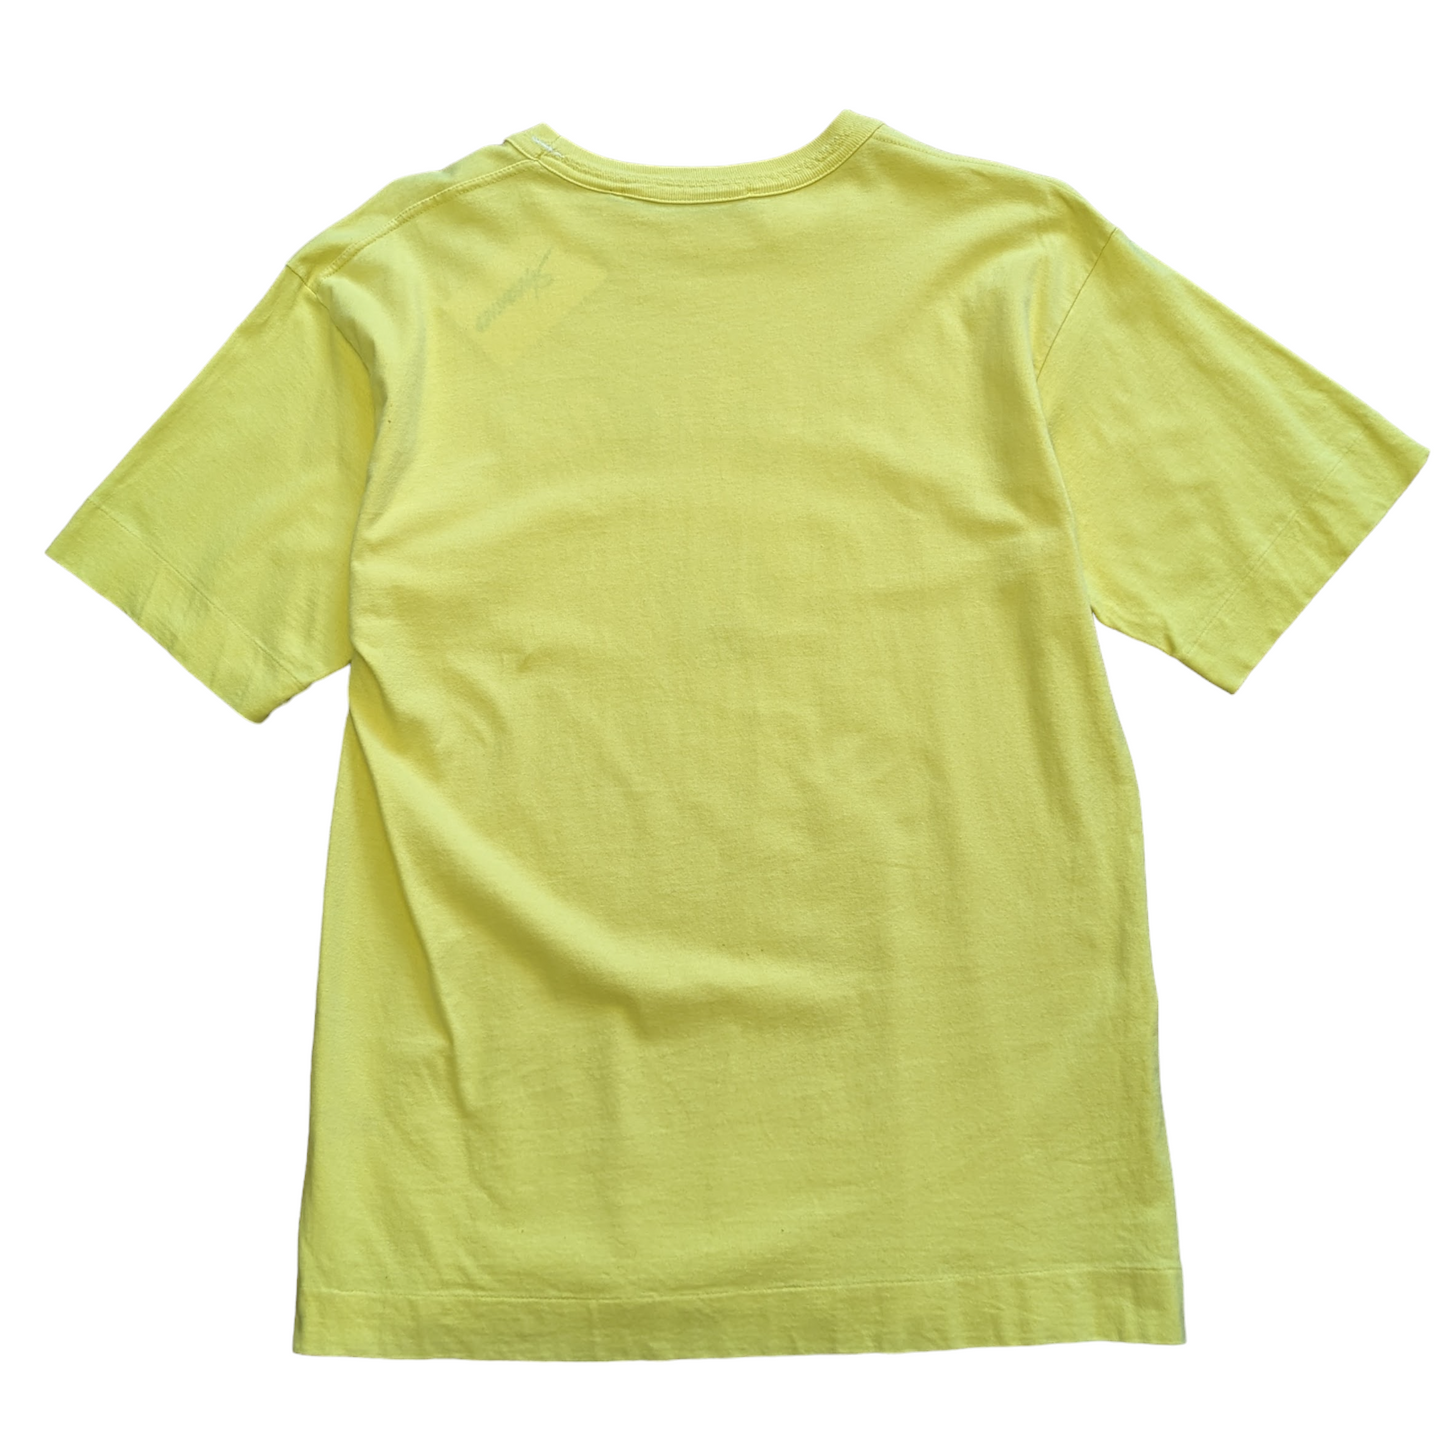 90s Best Company Single Stitch T-Shirt Size S